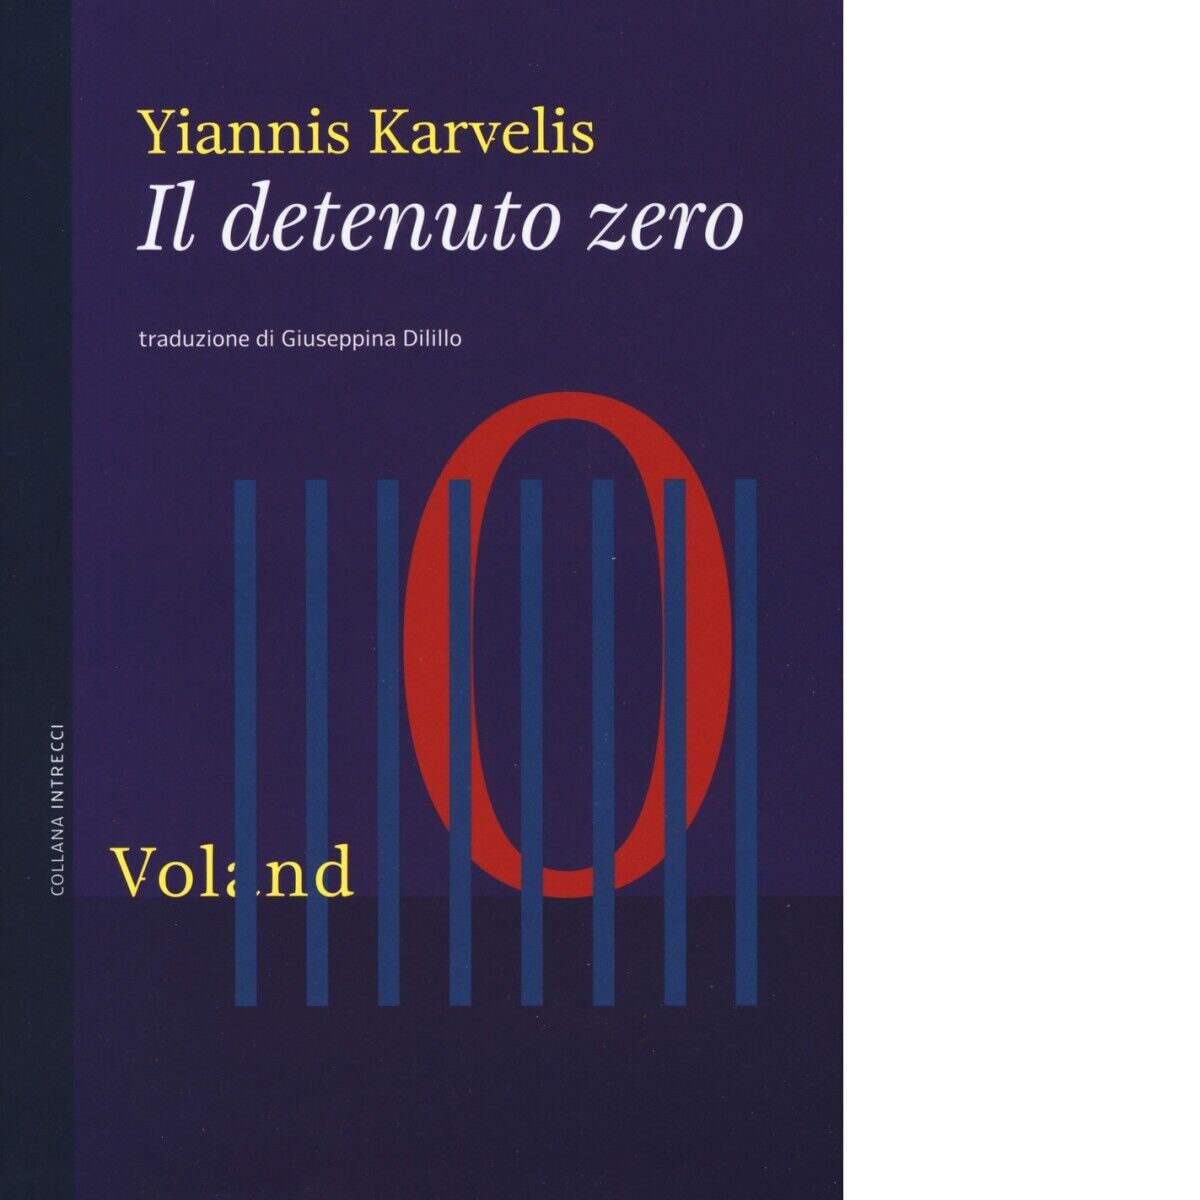  Il detenuto zero di Yiannis Karvelis, 2019, Voland